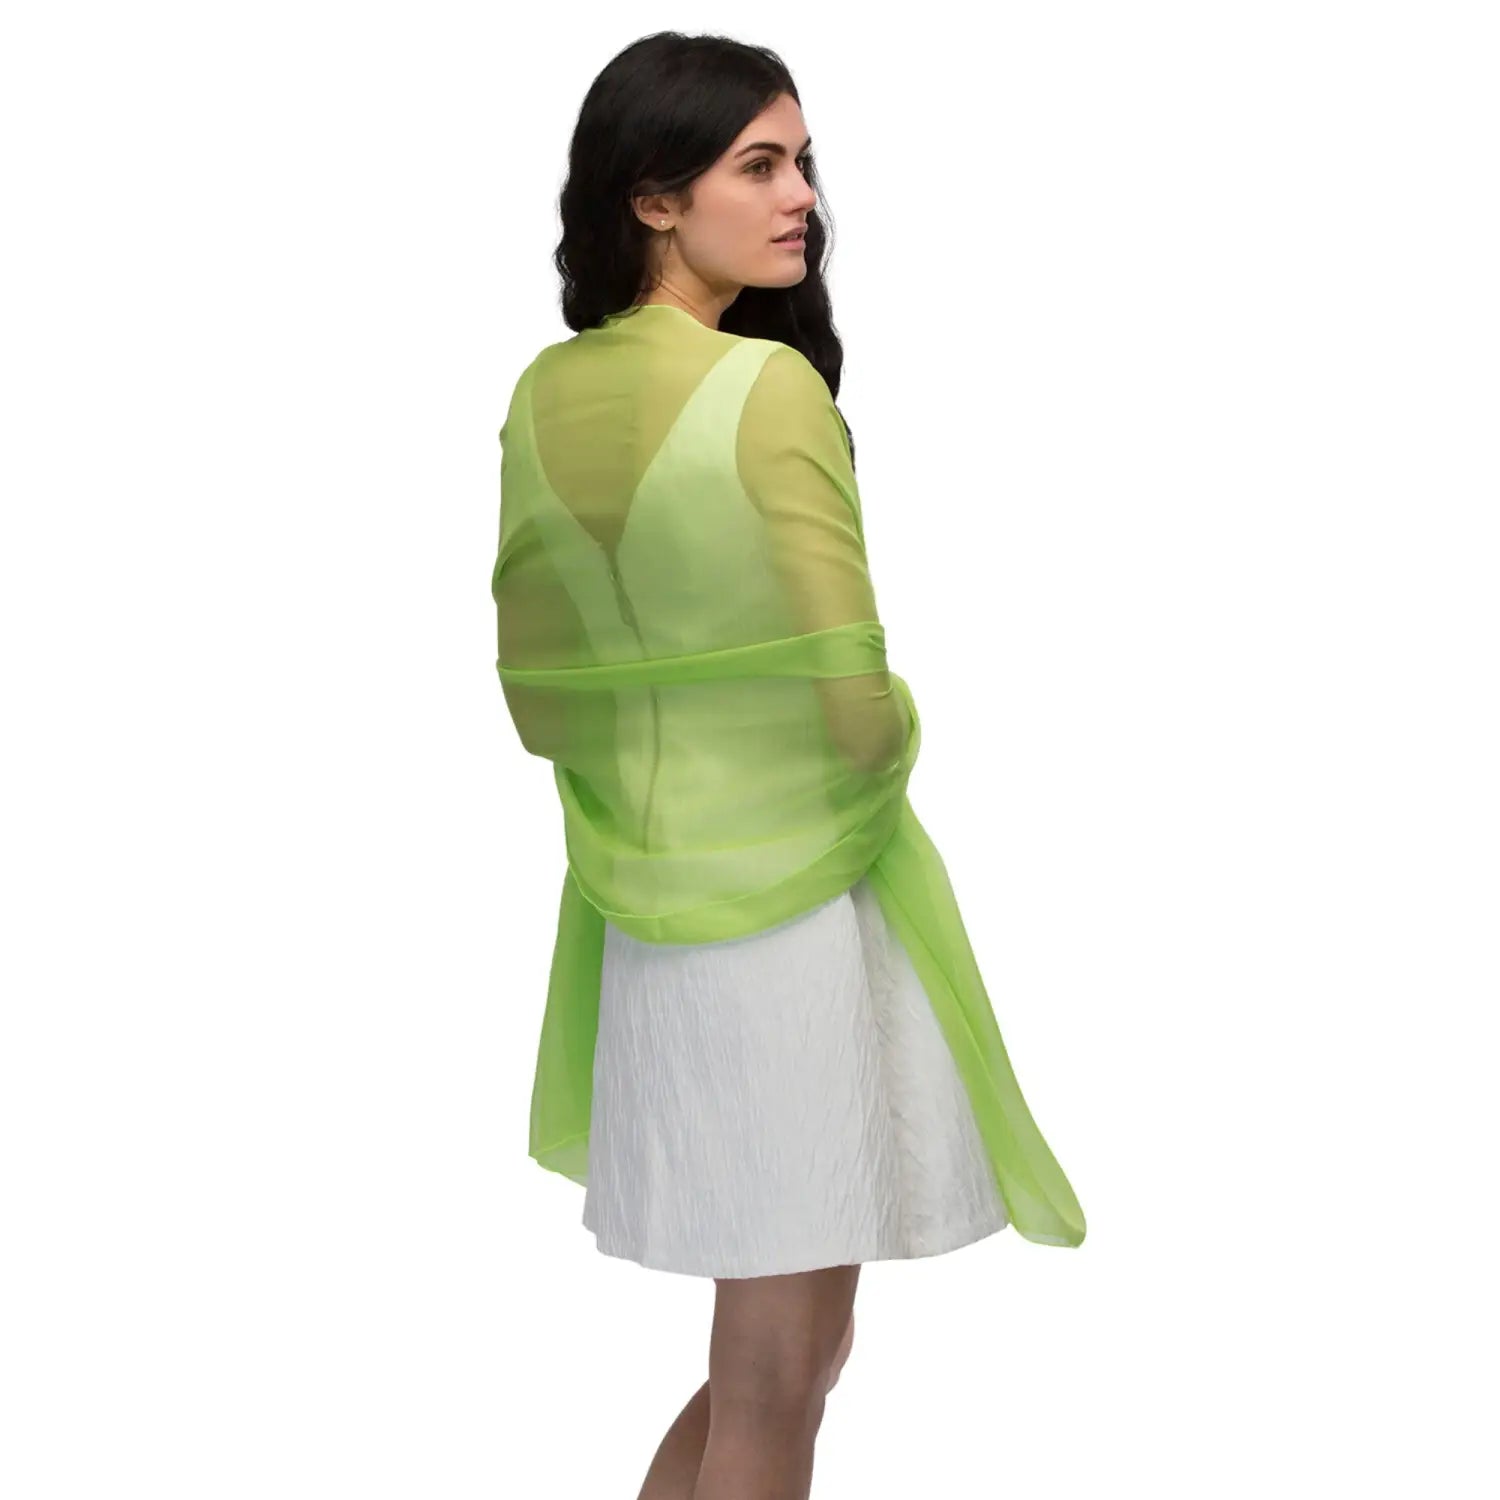 Woman in green blouse and white skirt wearing Plain Chiffon Shawl Semi-Opaque - Versatile Scarf.